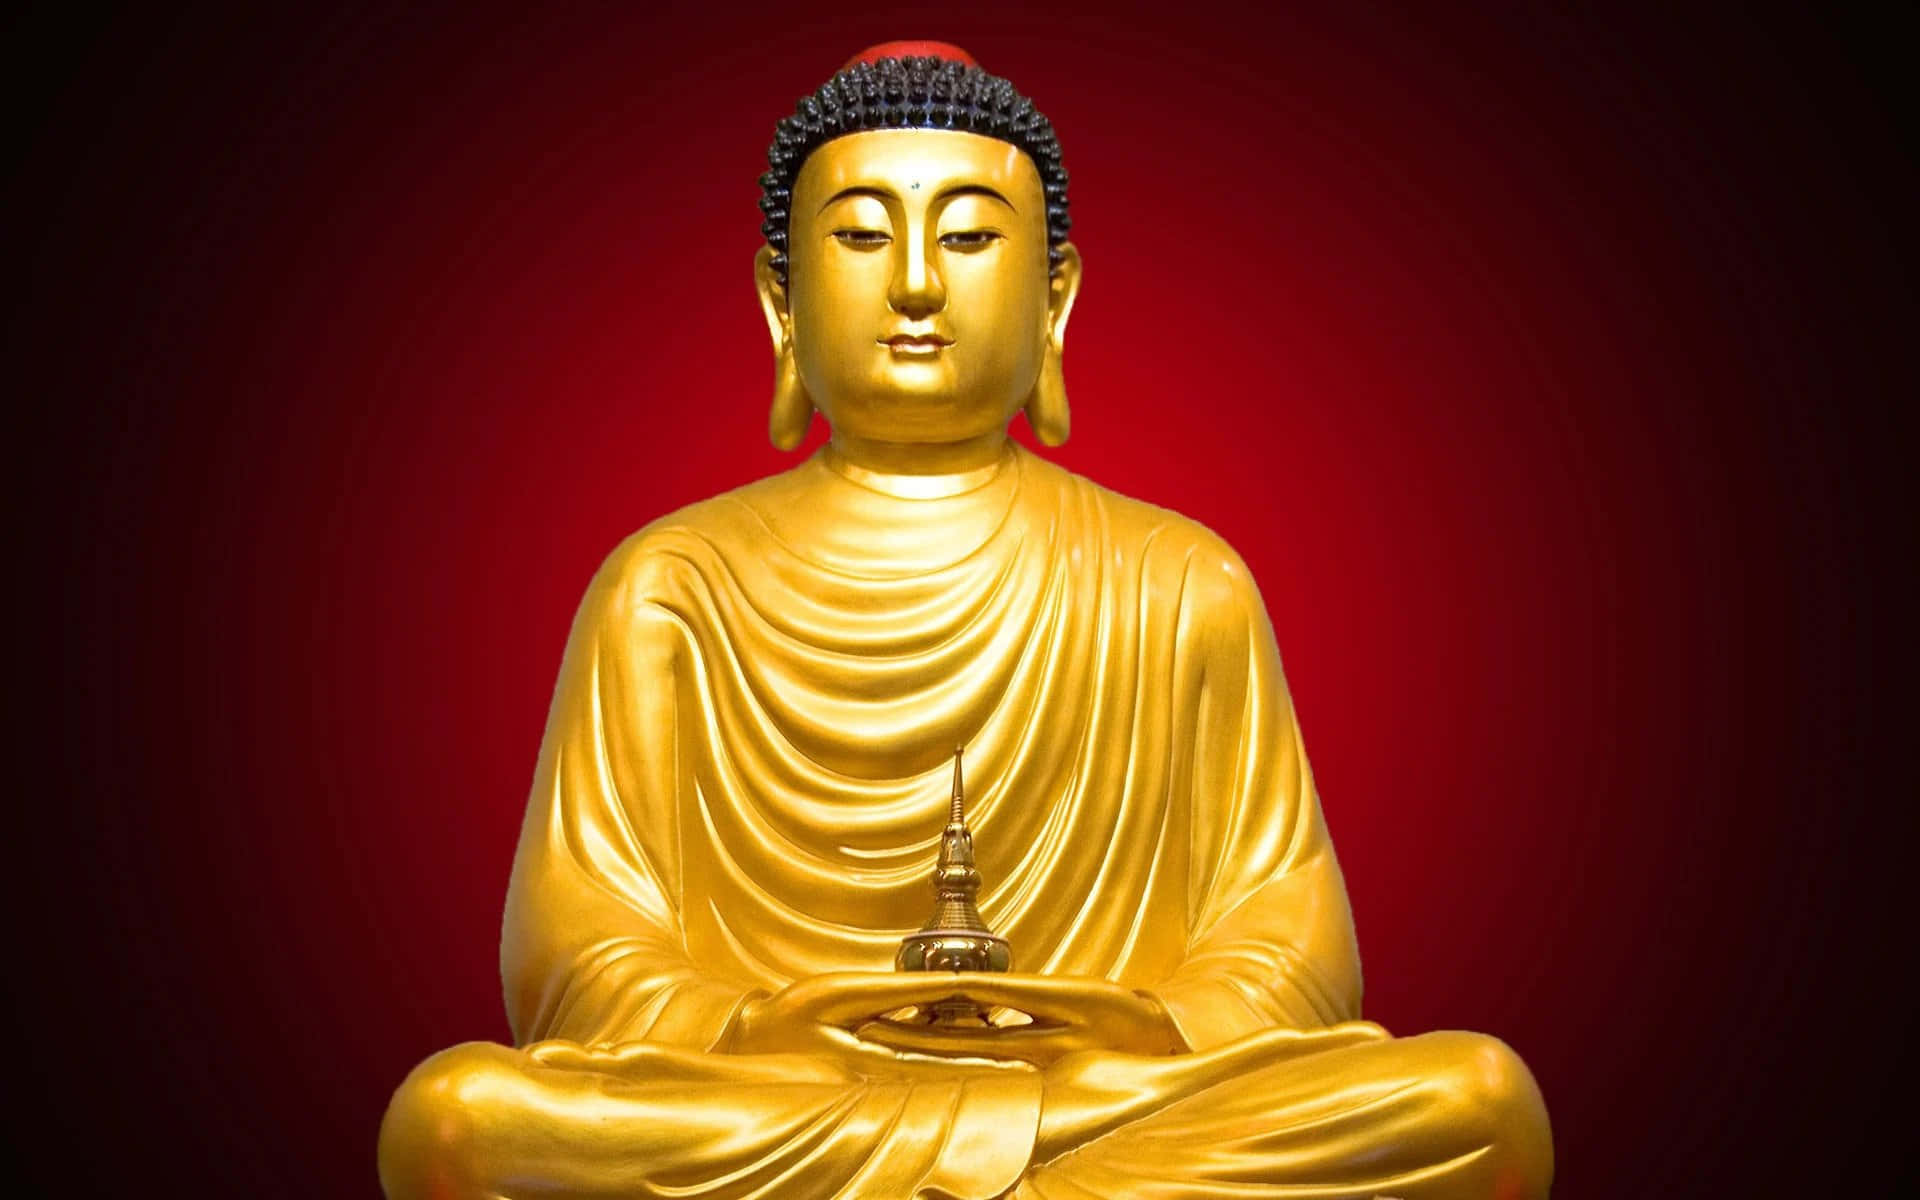 While in deep meditation beneath the Bodhi tree, Gautama Buddha experiences enlightenment.